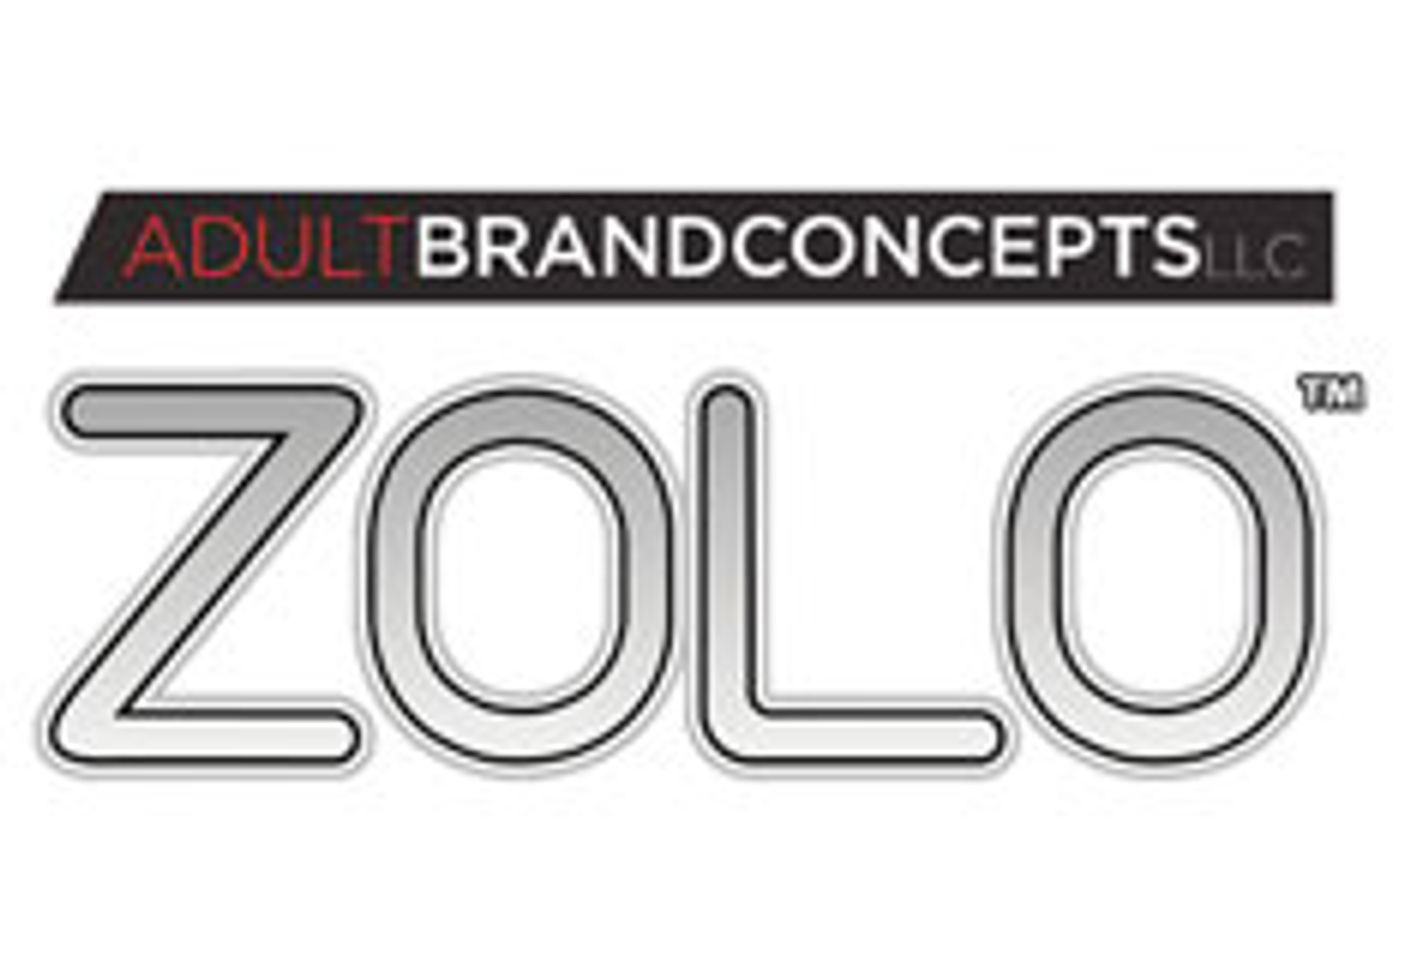 Zolo Pleasure System Sweeps 2015 Nomination Season